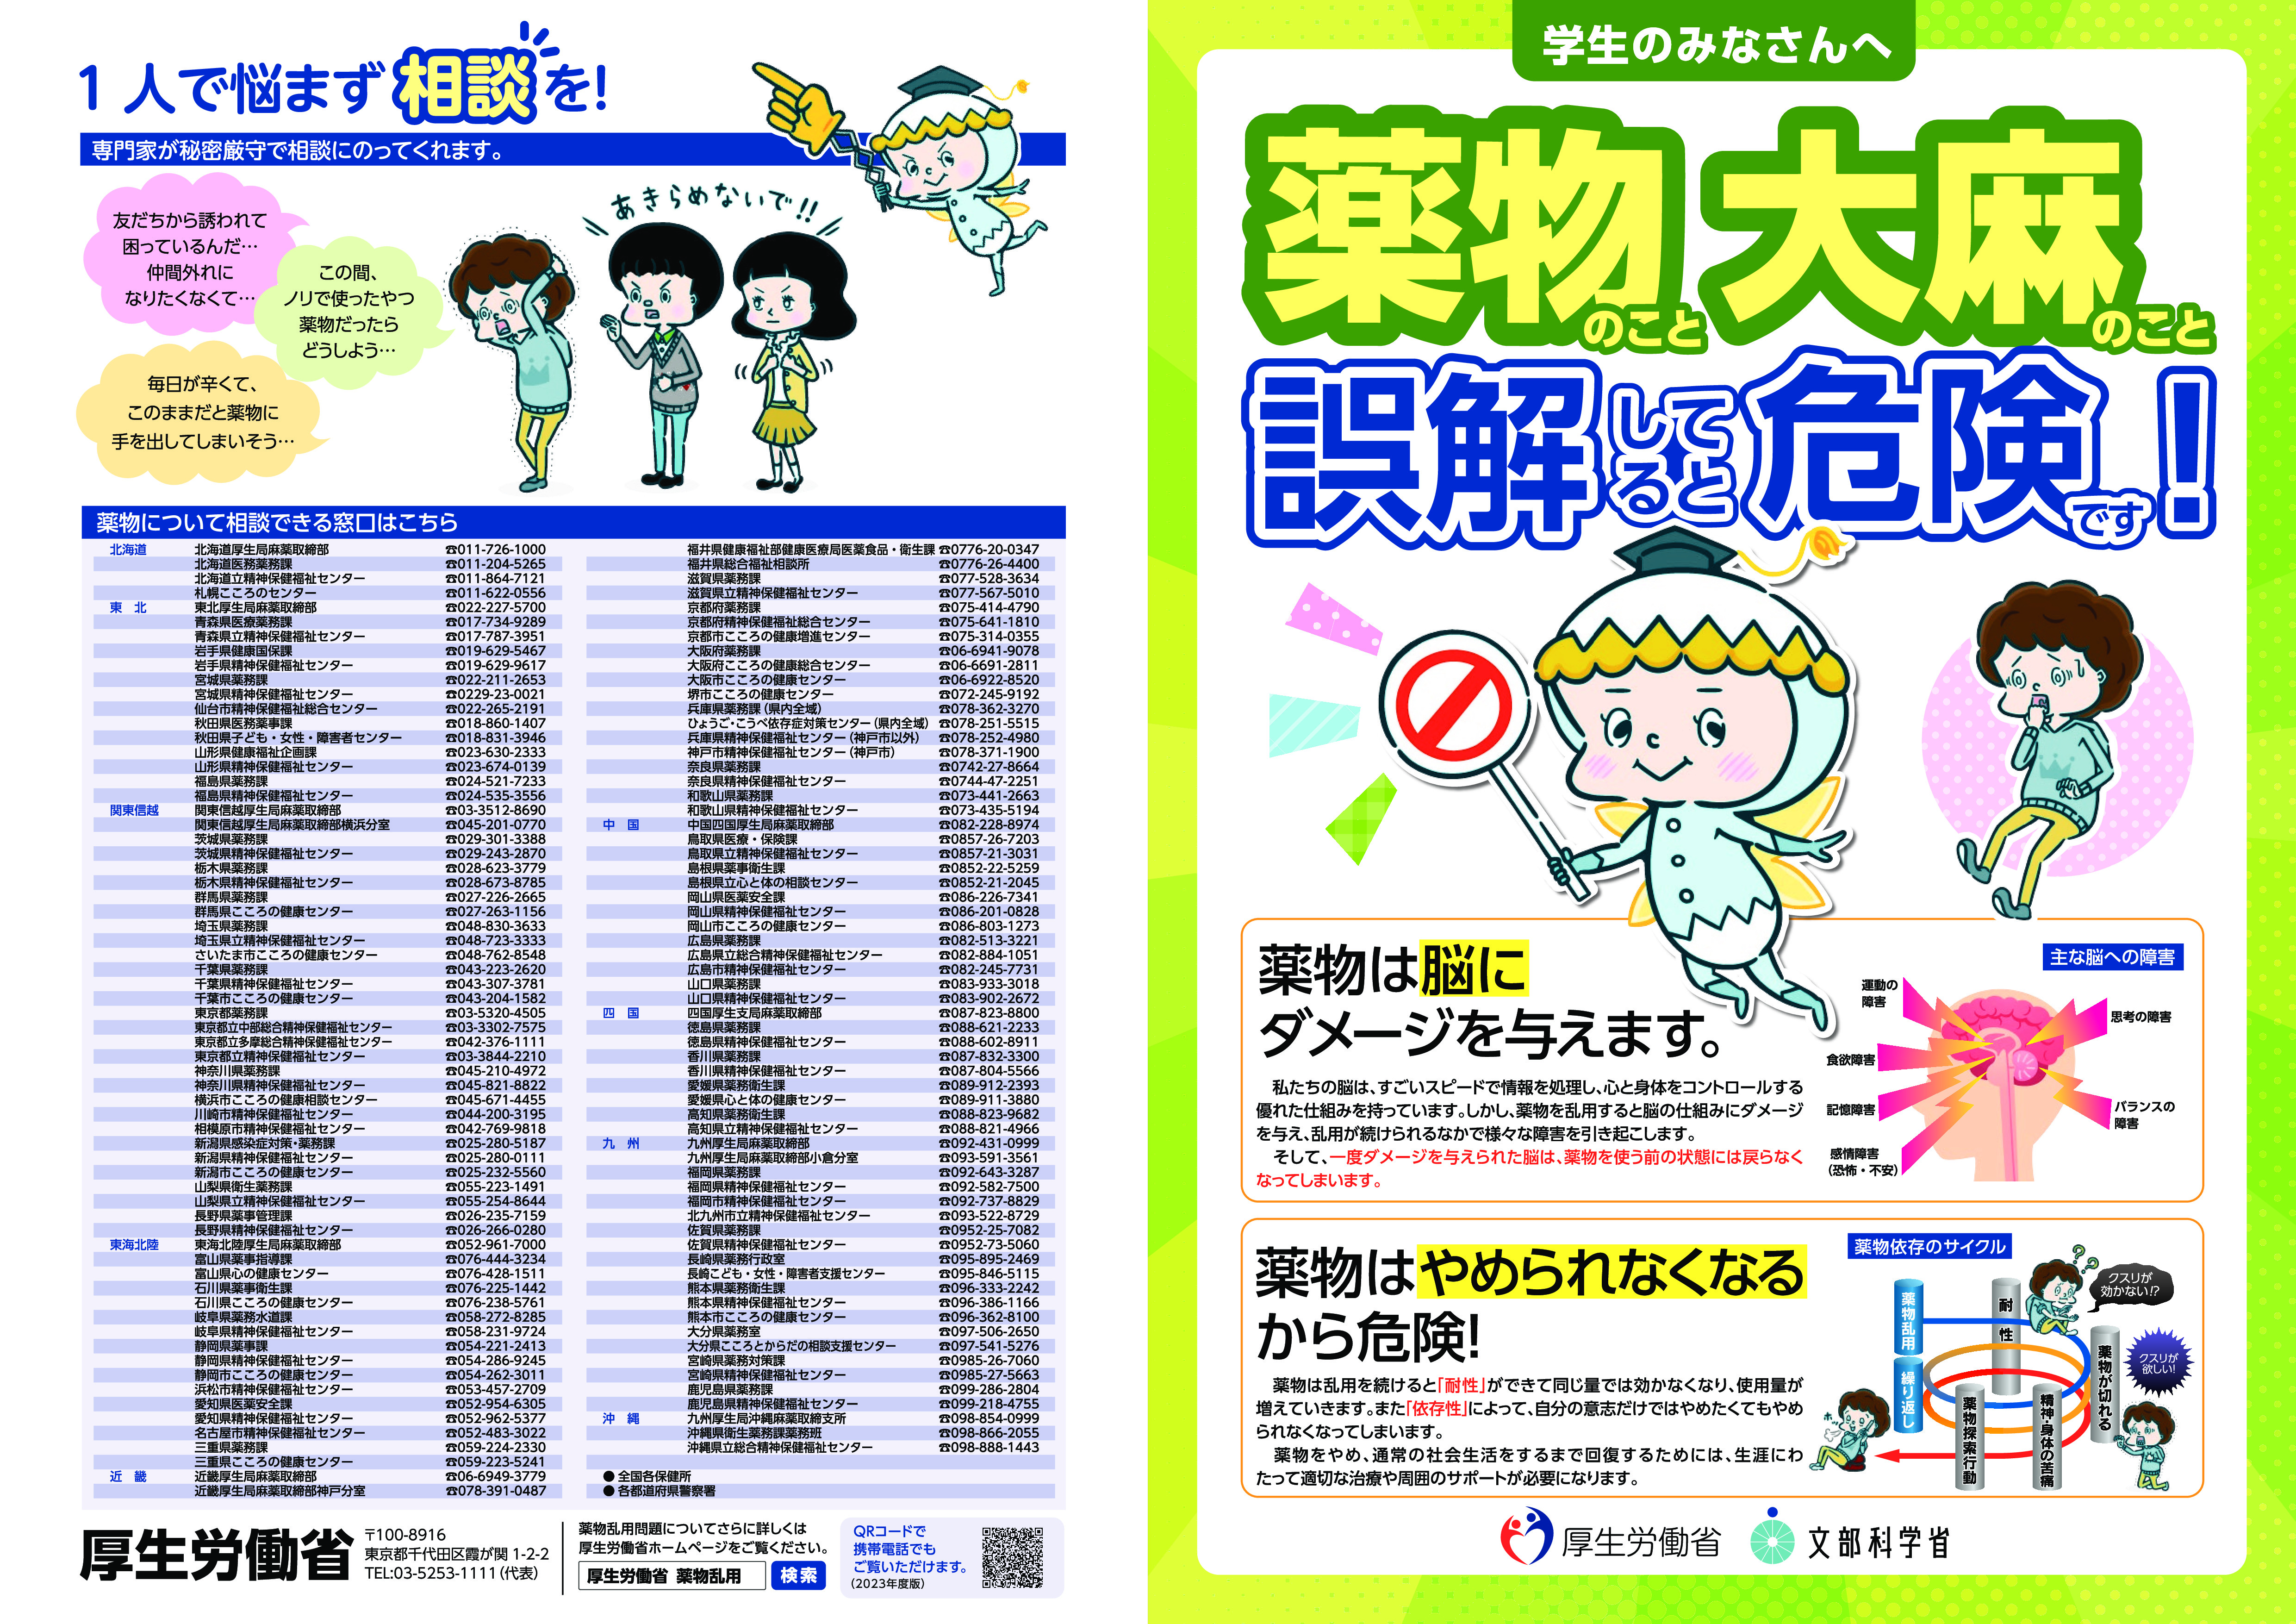 MHLW_yakubutsu-poster1.png (85331)